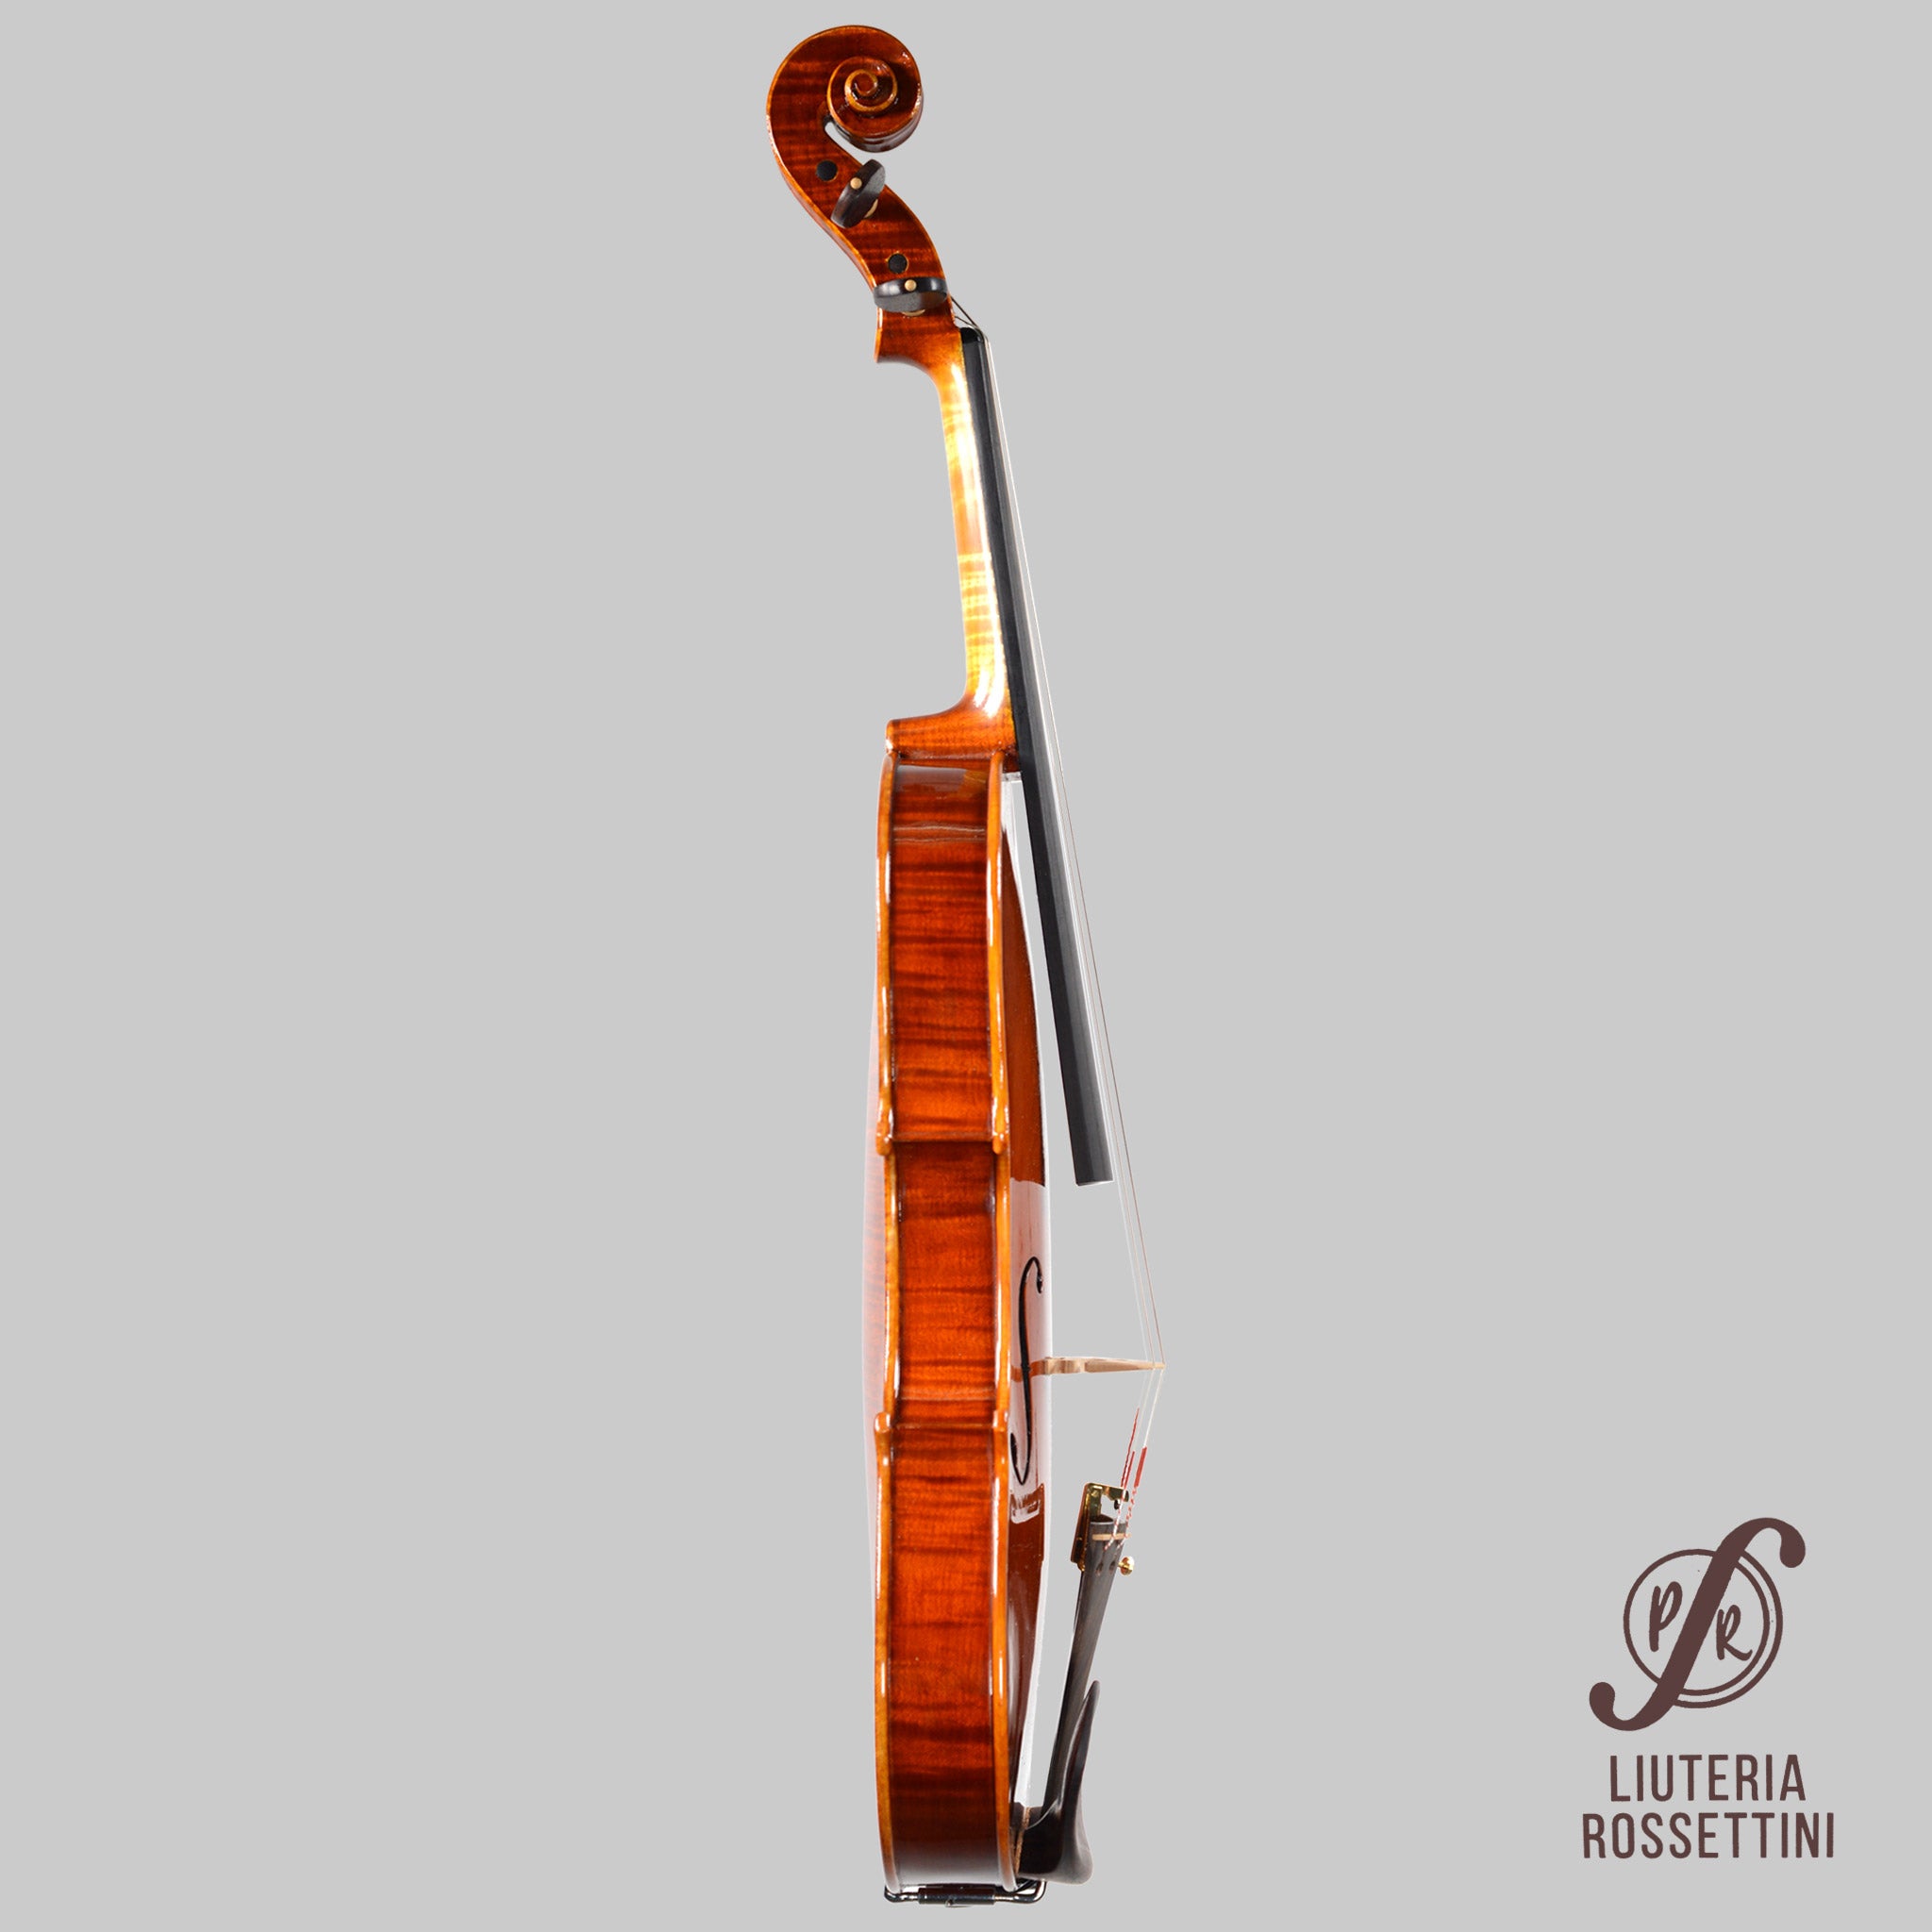 Paolo Rossettini 'Emiliani' 1703 Stradivarius, 2020 Violin